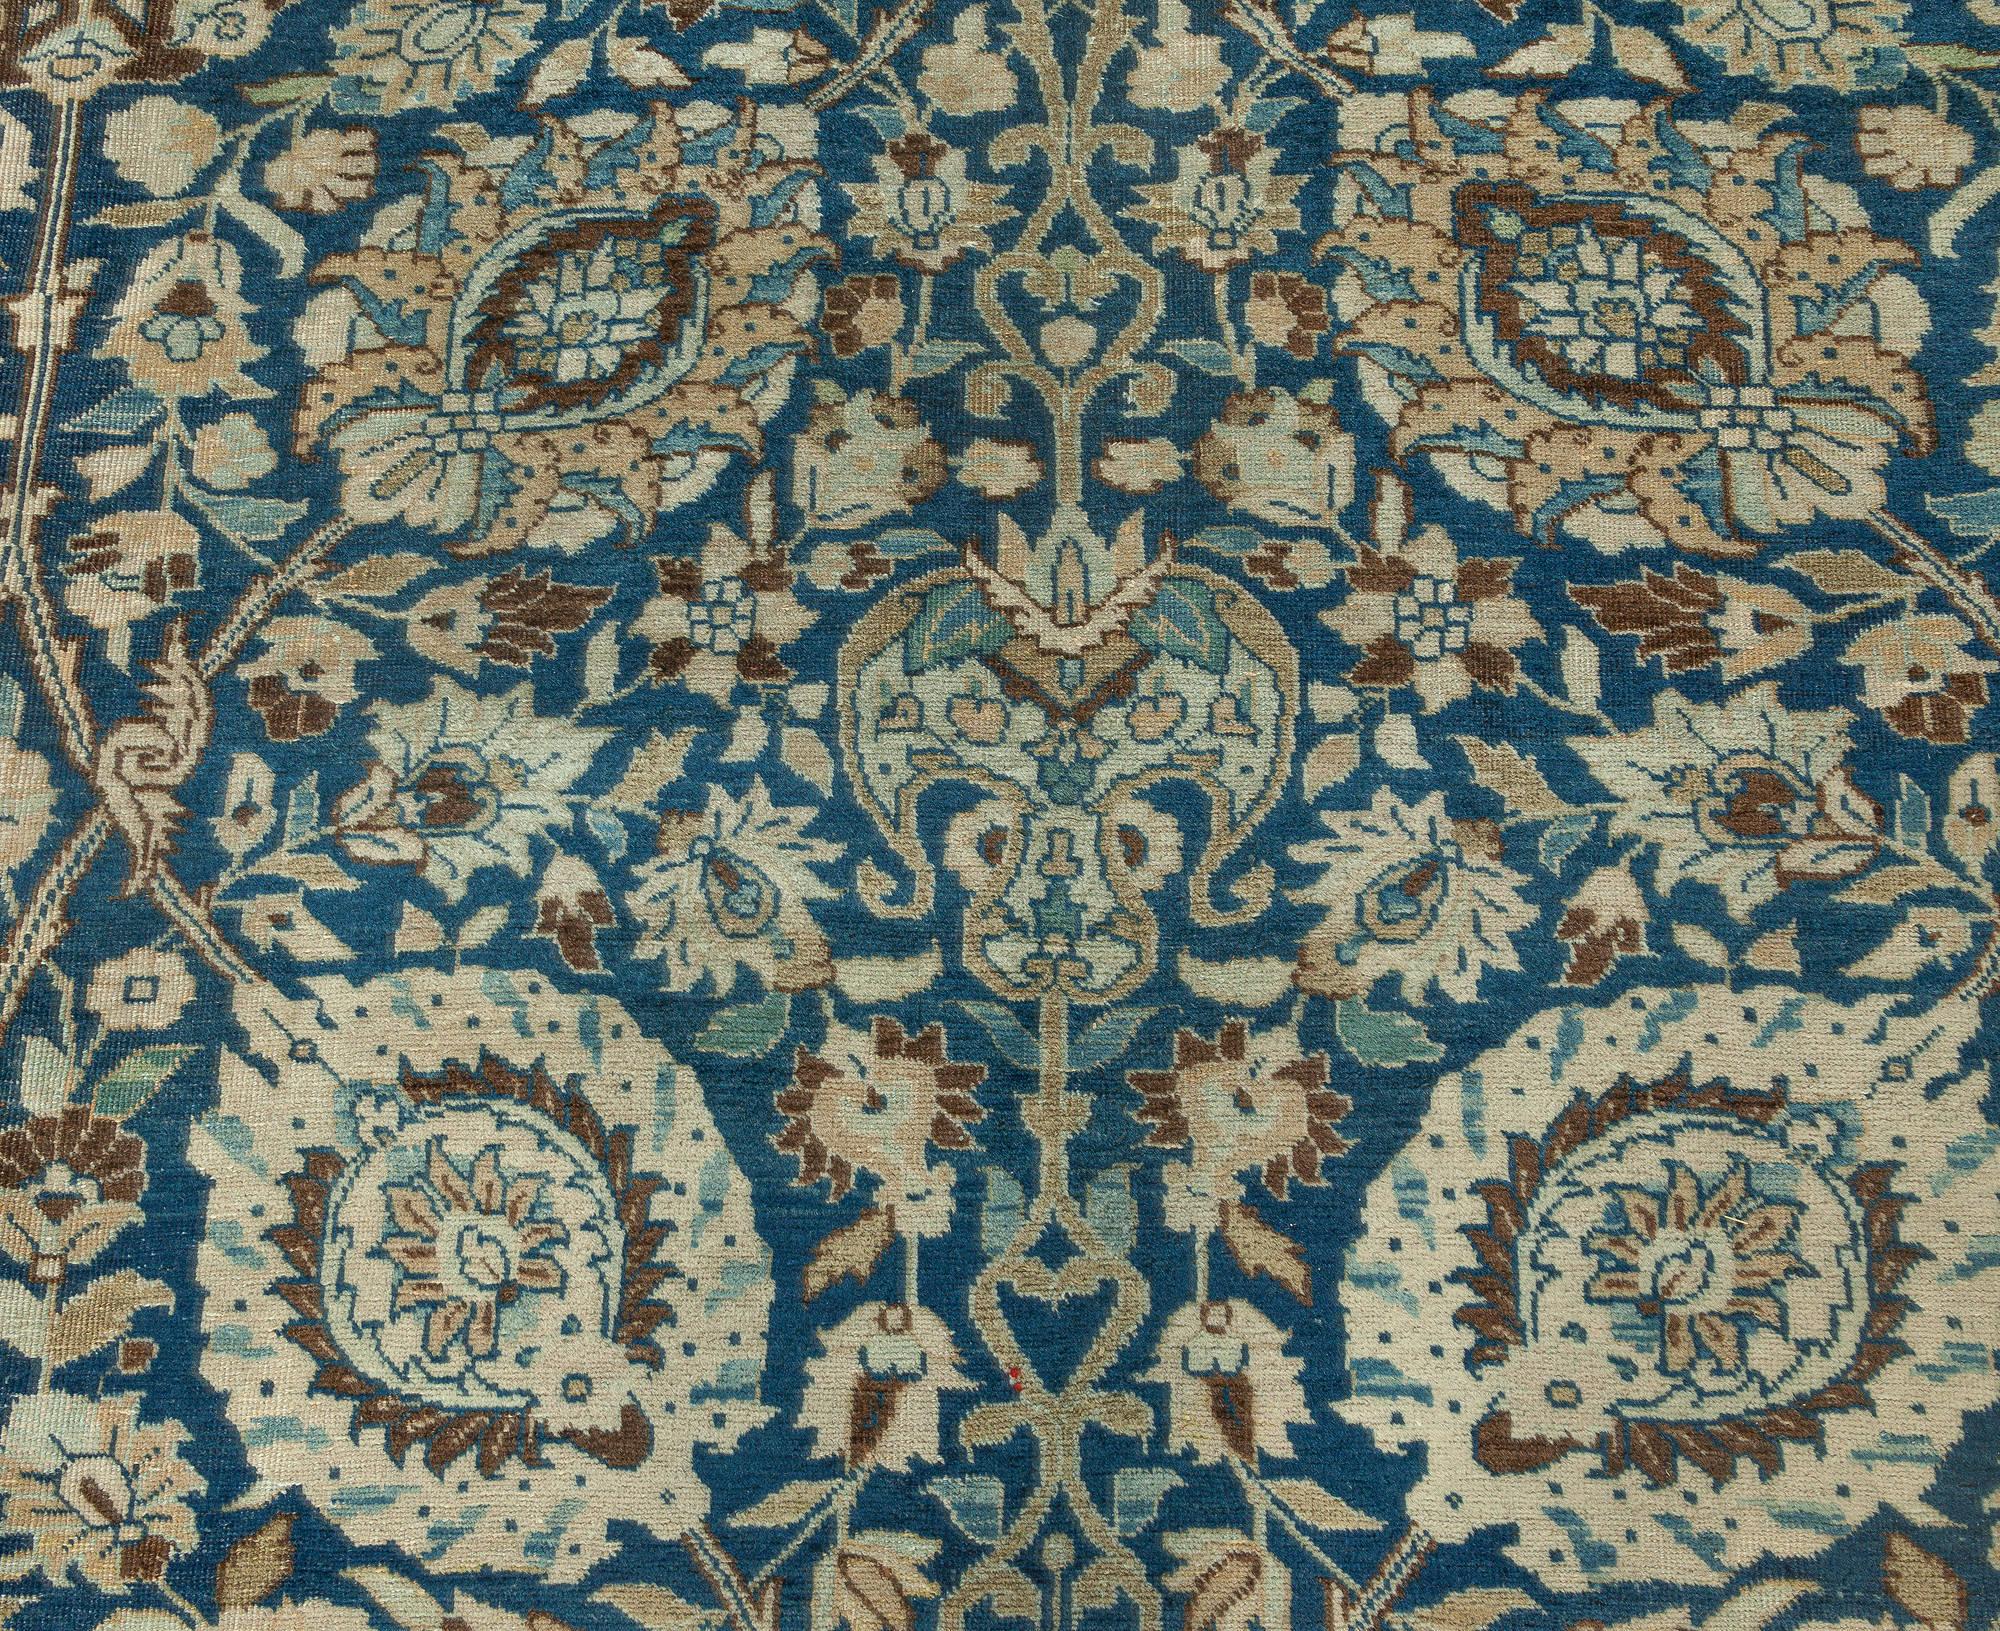 Vintage Persian Tabriz botanic handmade wool carpet
Size: 11'9